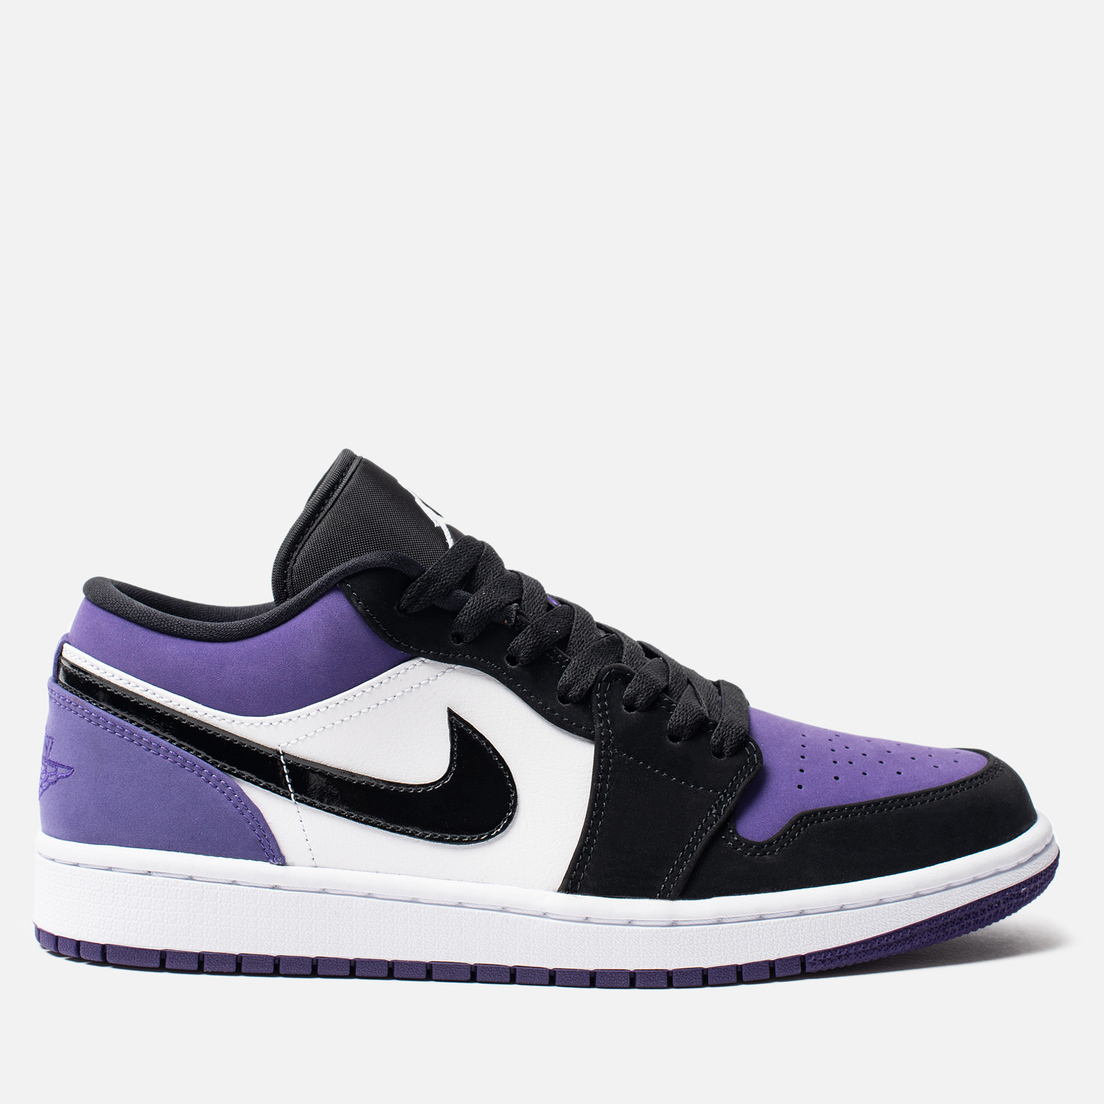 court purple jordan 1 low